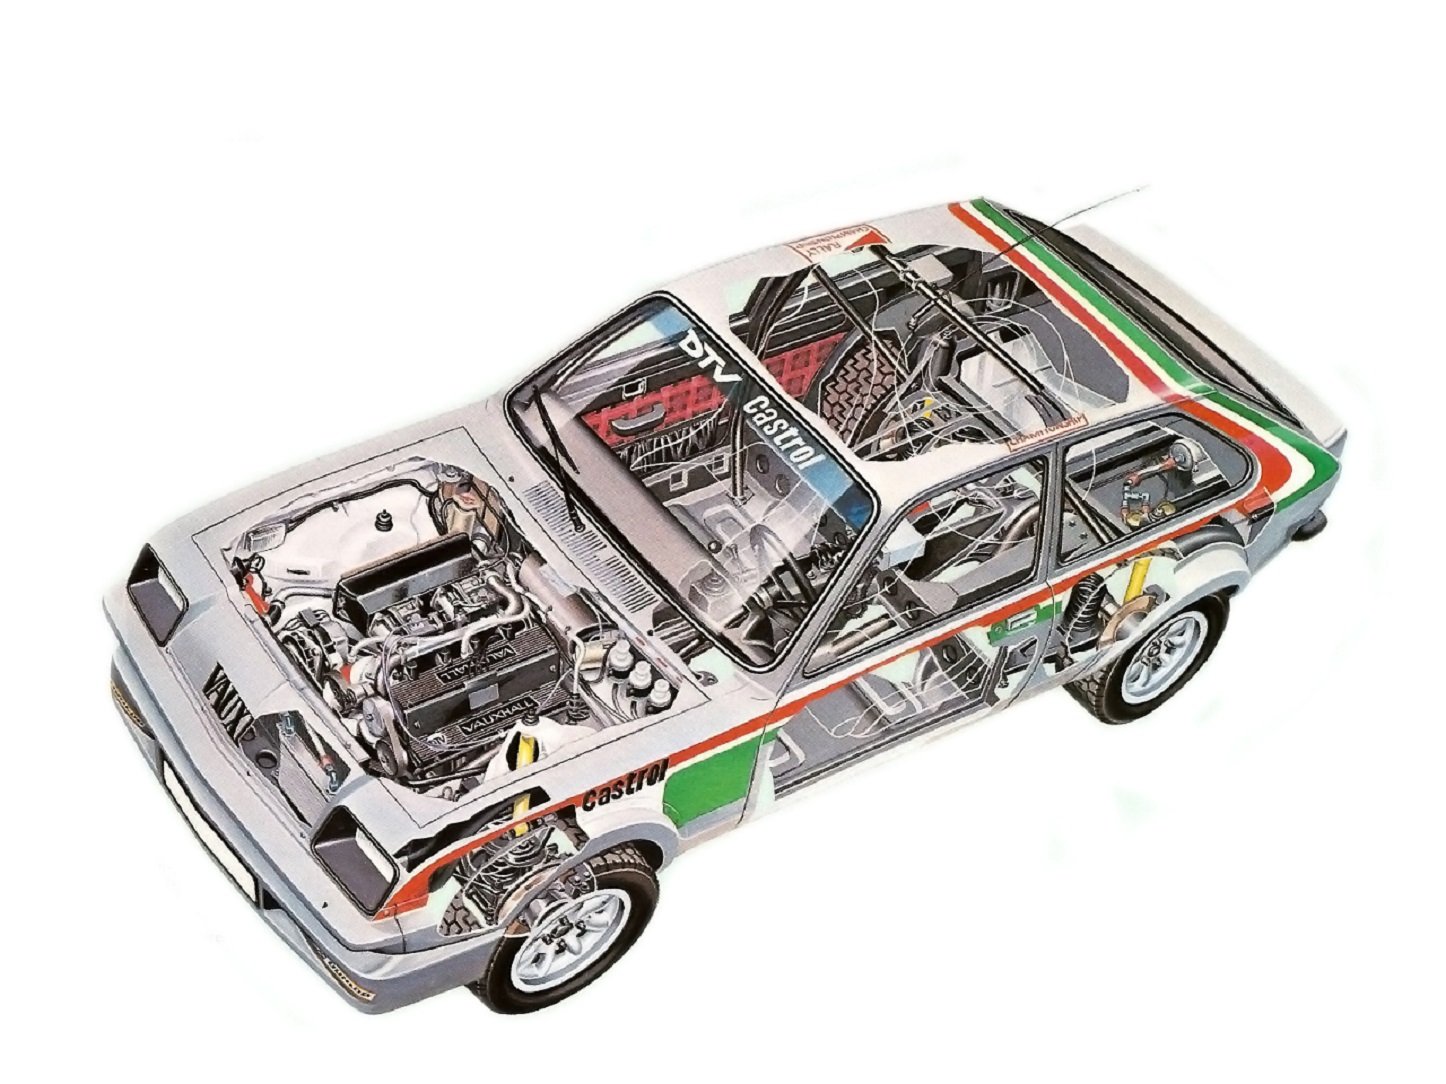 sportcars, Cutaway, Technical, Rally, Cars, Vauxhall, Chevette, 2300 hs, 1979 Wallpaper